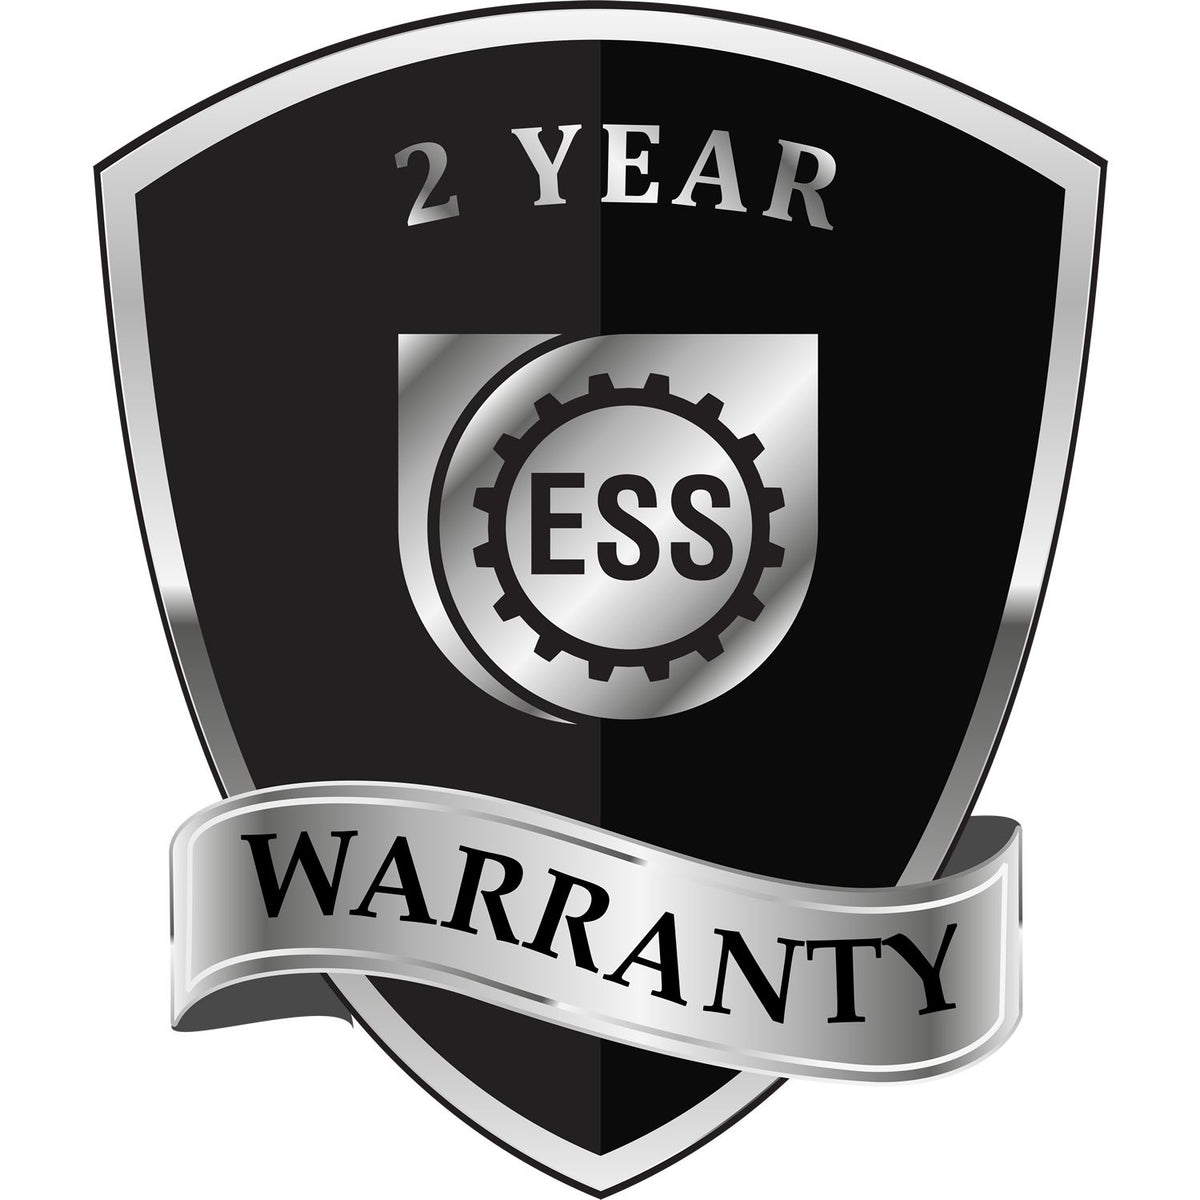 A black and silver badge or emblem showing warranty information for the Gift West Virginia Land Surveyor Seal